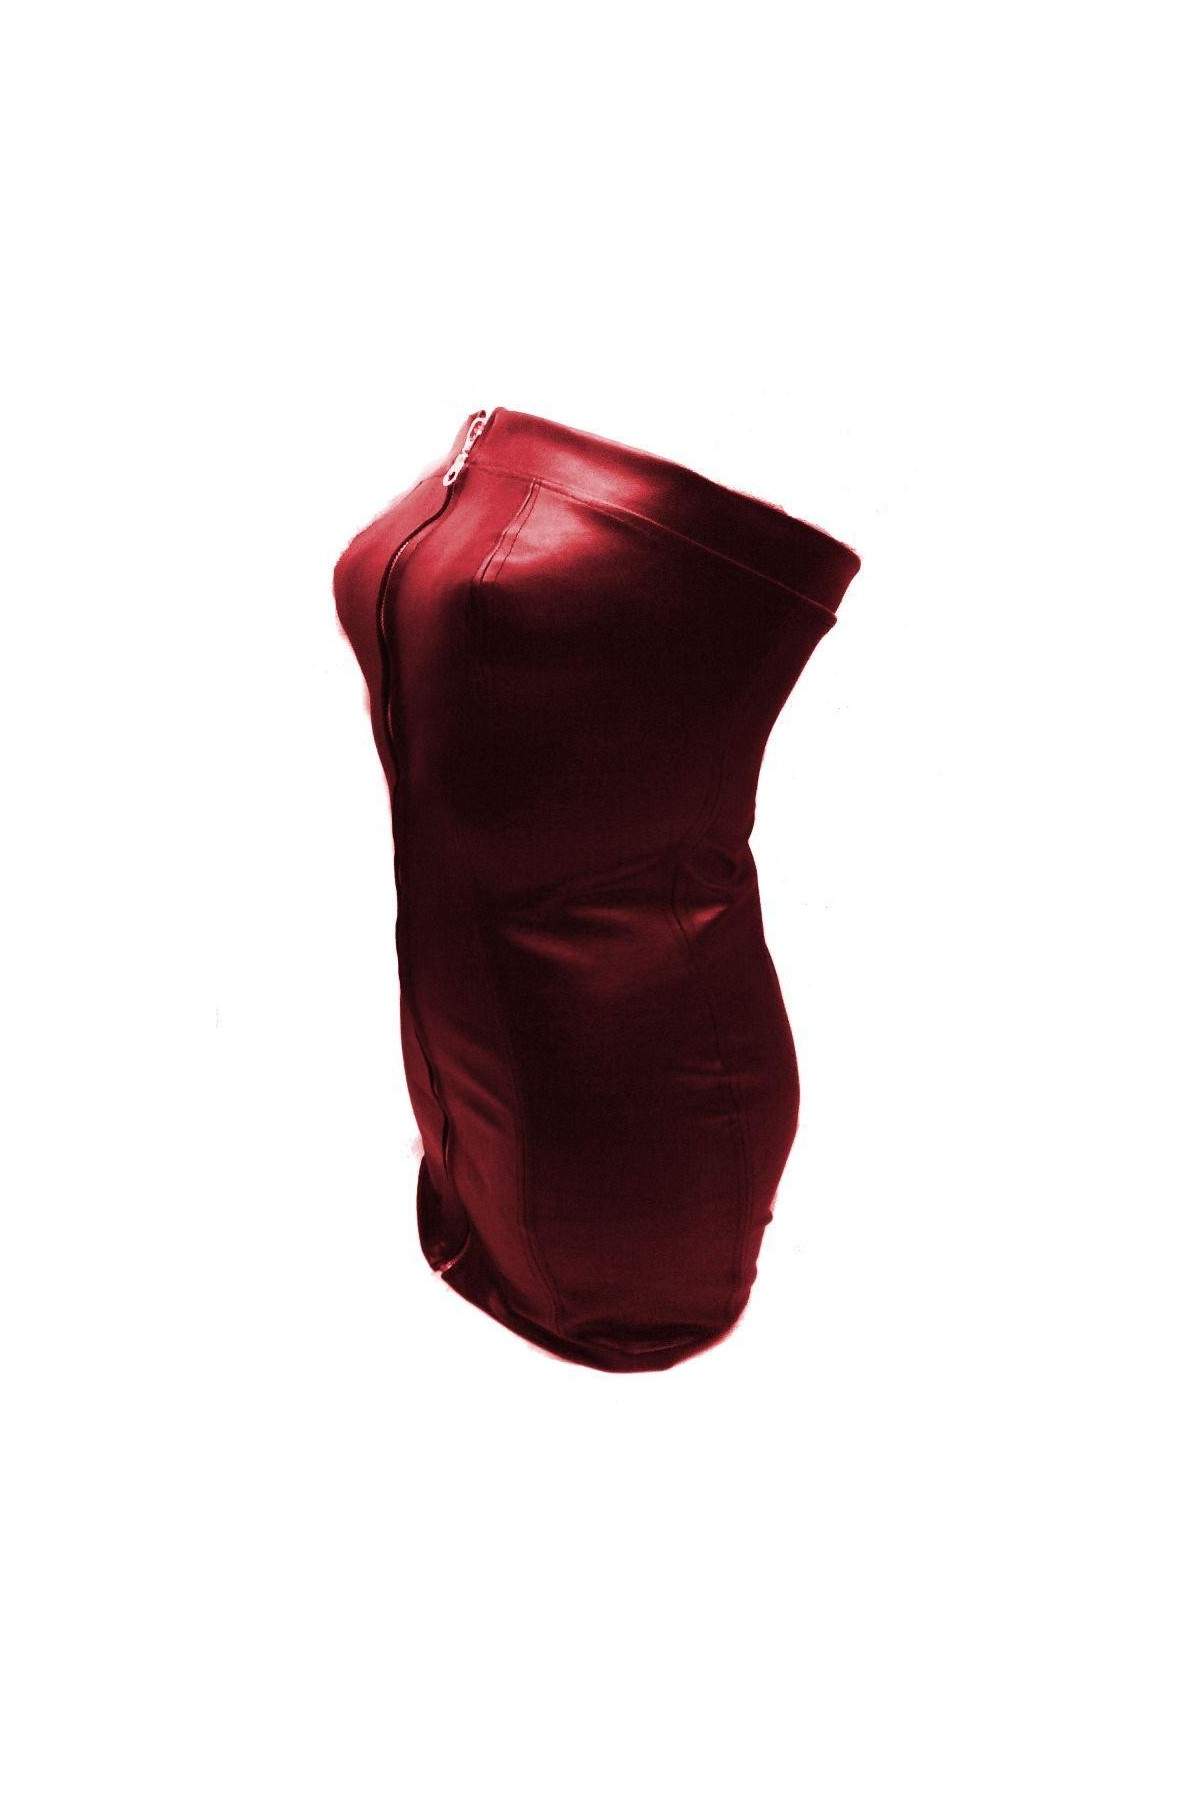 Extravagantes Softes Designer Leder Kleid rot Größe L - XXL (44 - 52) - Rabatt